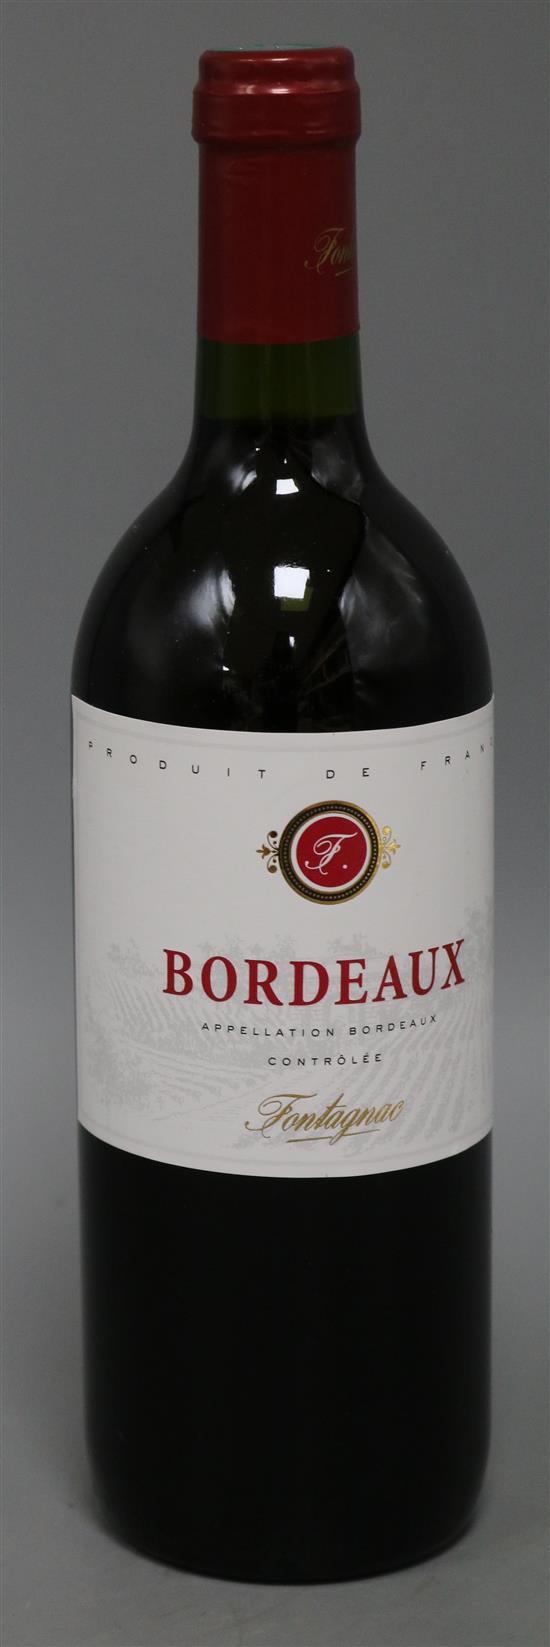 Six bottles of Bordeaux Fontagnac wine